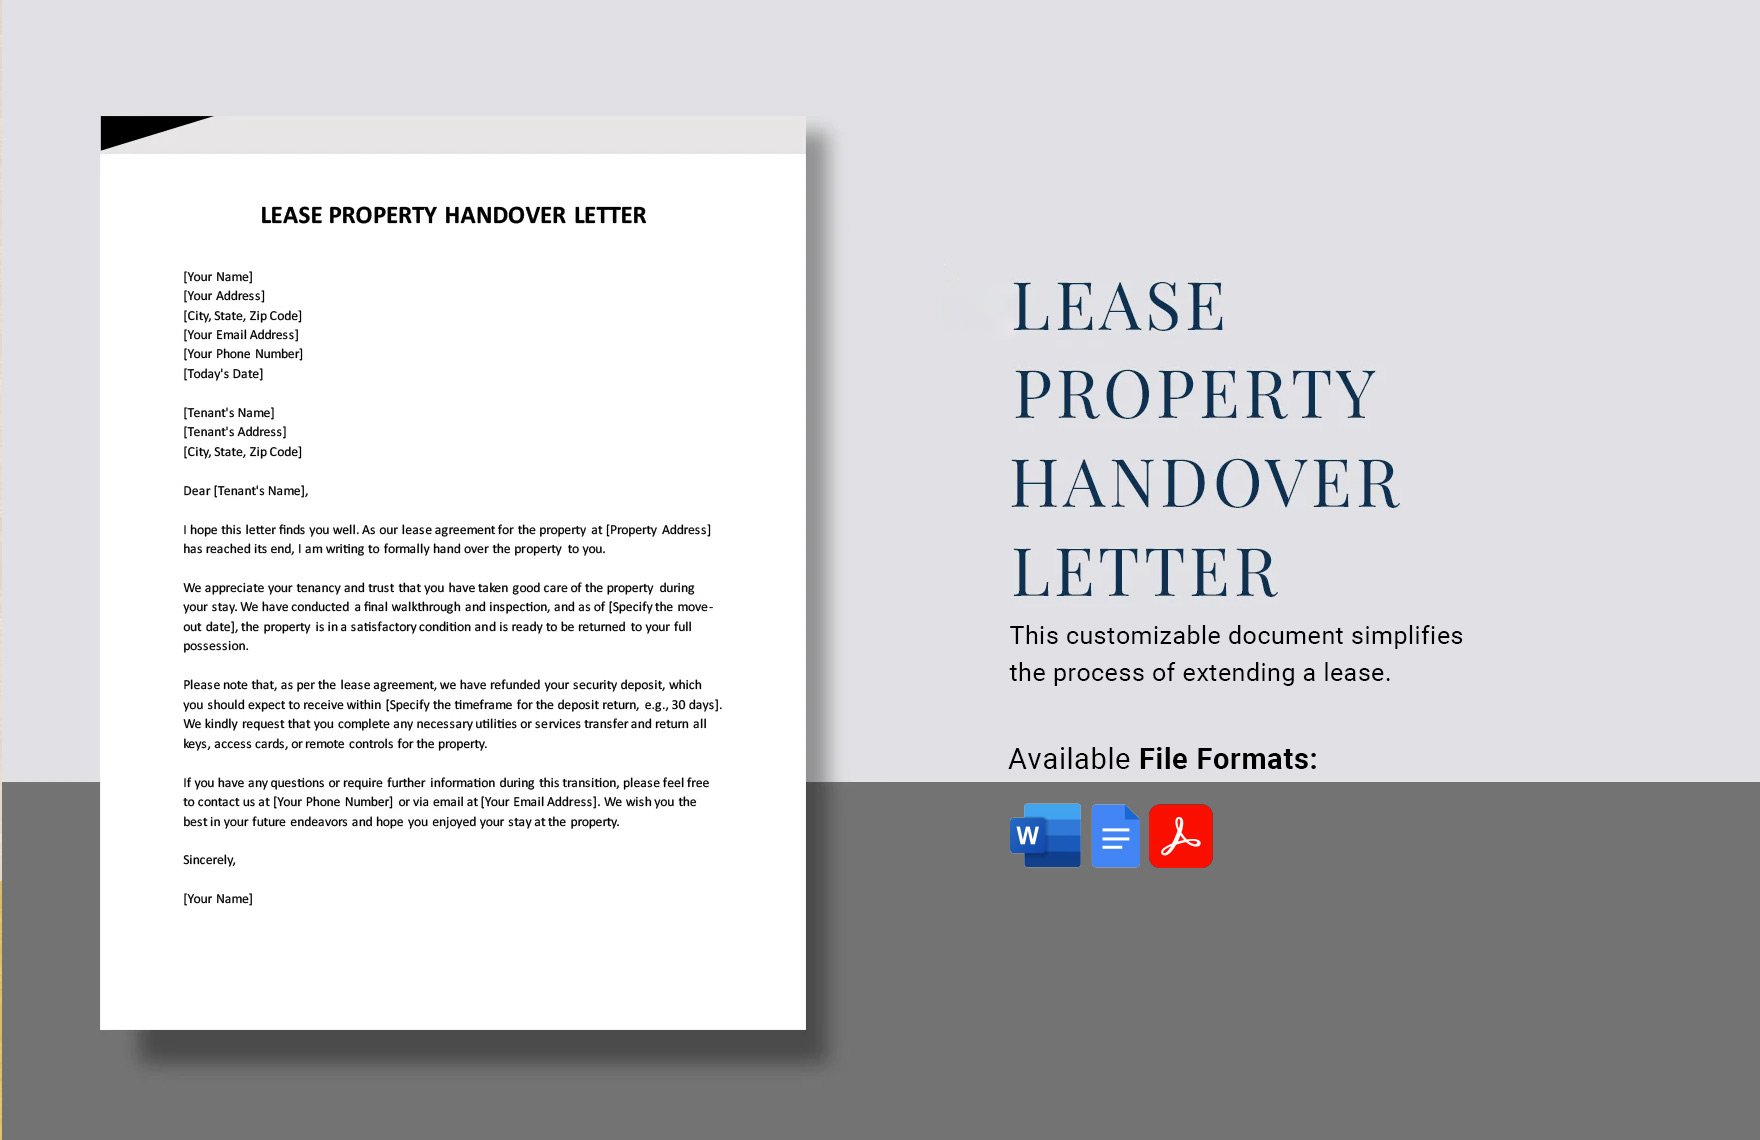 Lease Property Handover Letter in Word, Google Docs, PDF